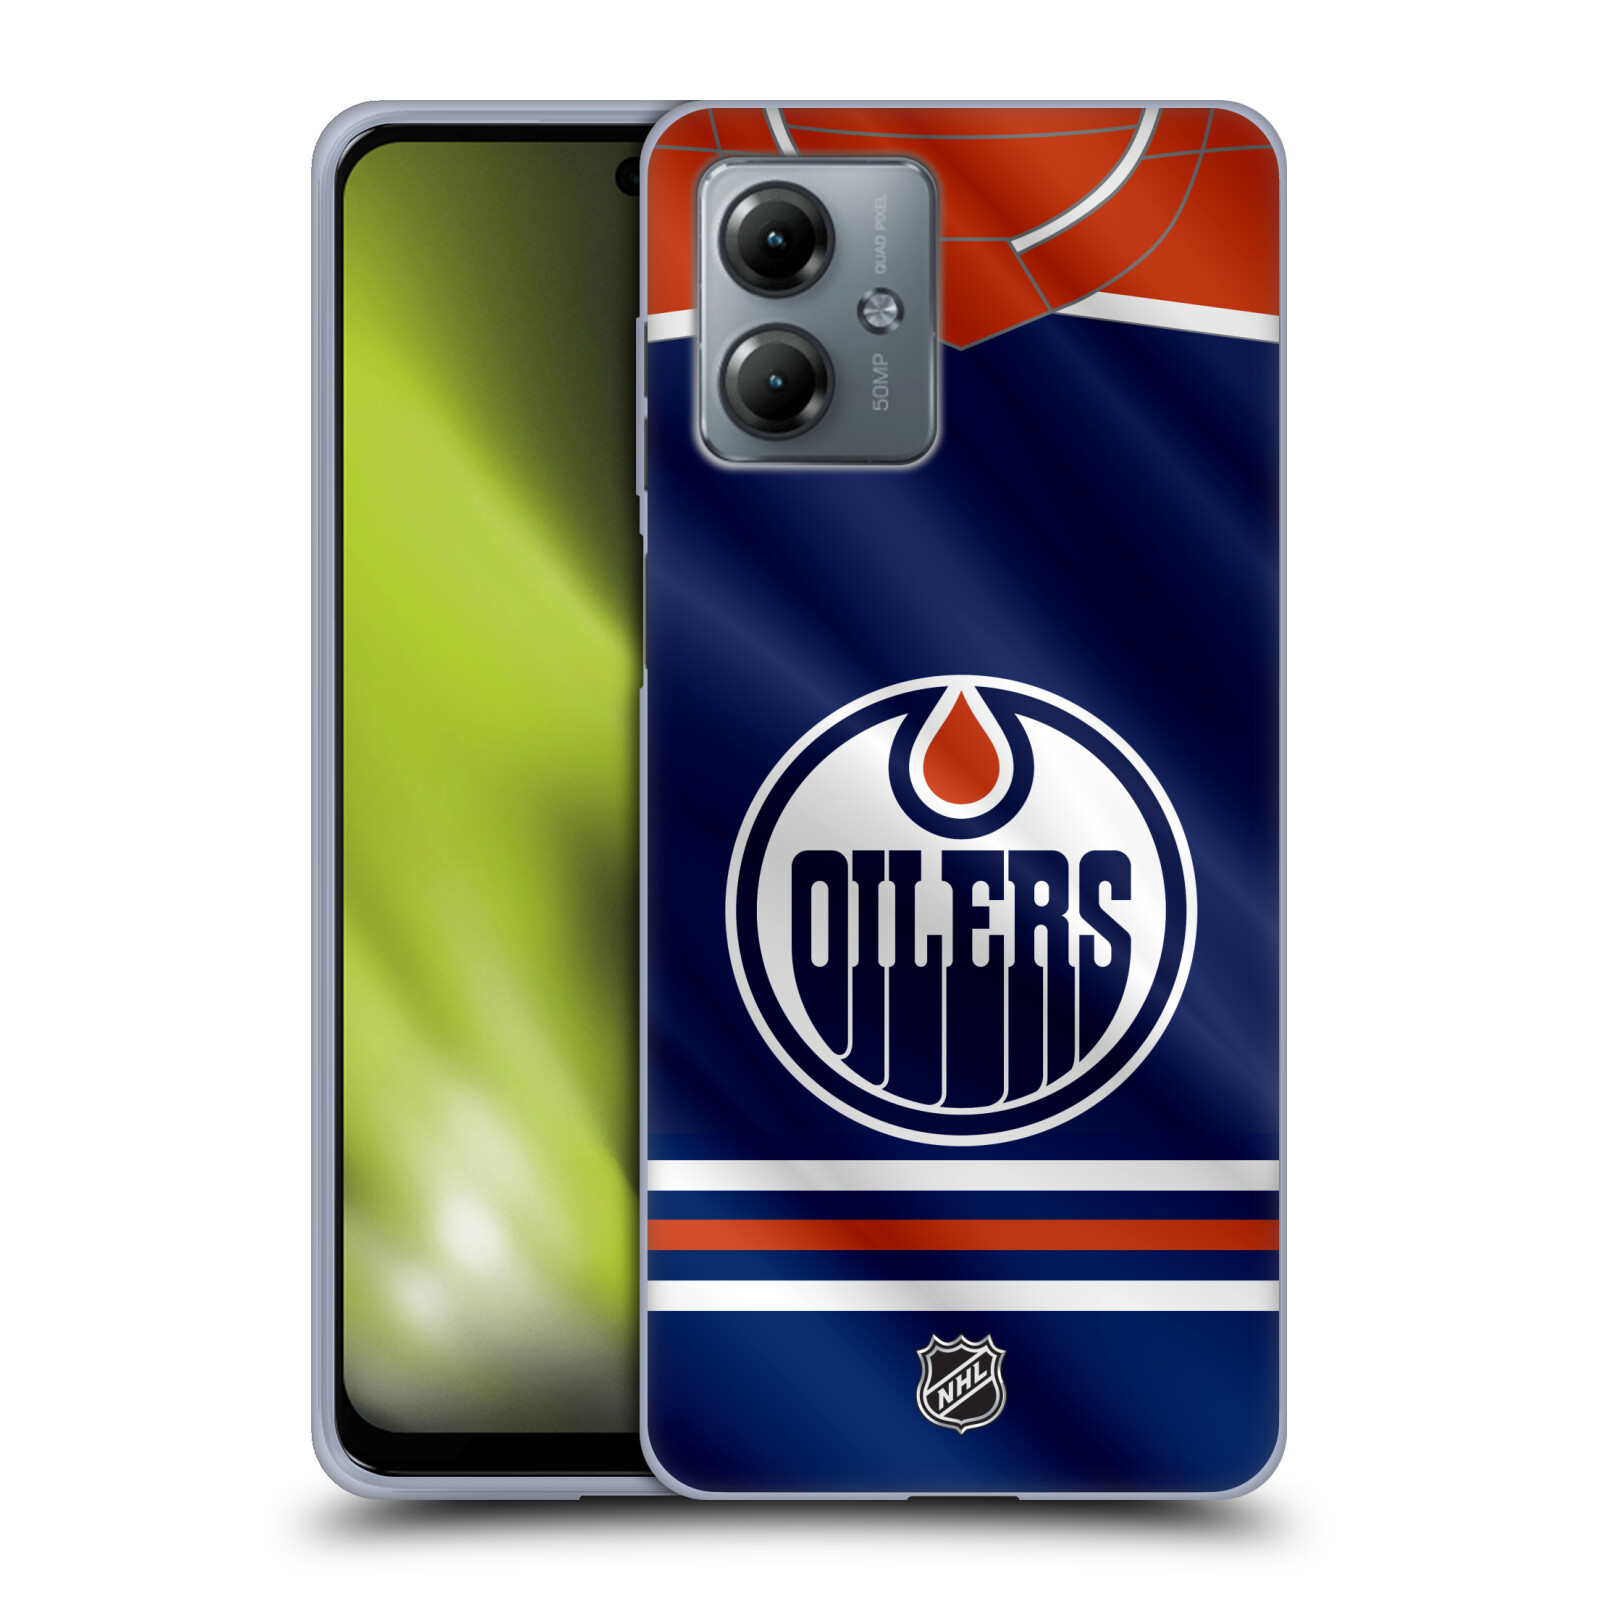 Silikonové pouzdro na mobil Motorola Moto G14 - NHL - Dres Edmonton Oilers (Silikonový kryt, obal, pouzdro na mobilní telefon Motorola Moto G14 s licencovaným motivem NHL - Dres Edmonton Oilers)